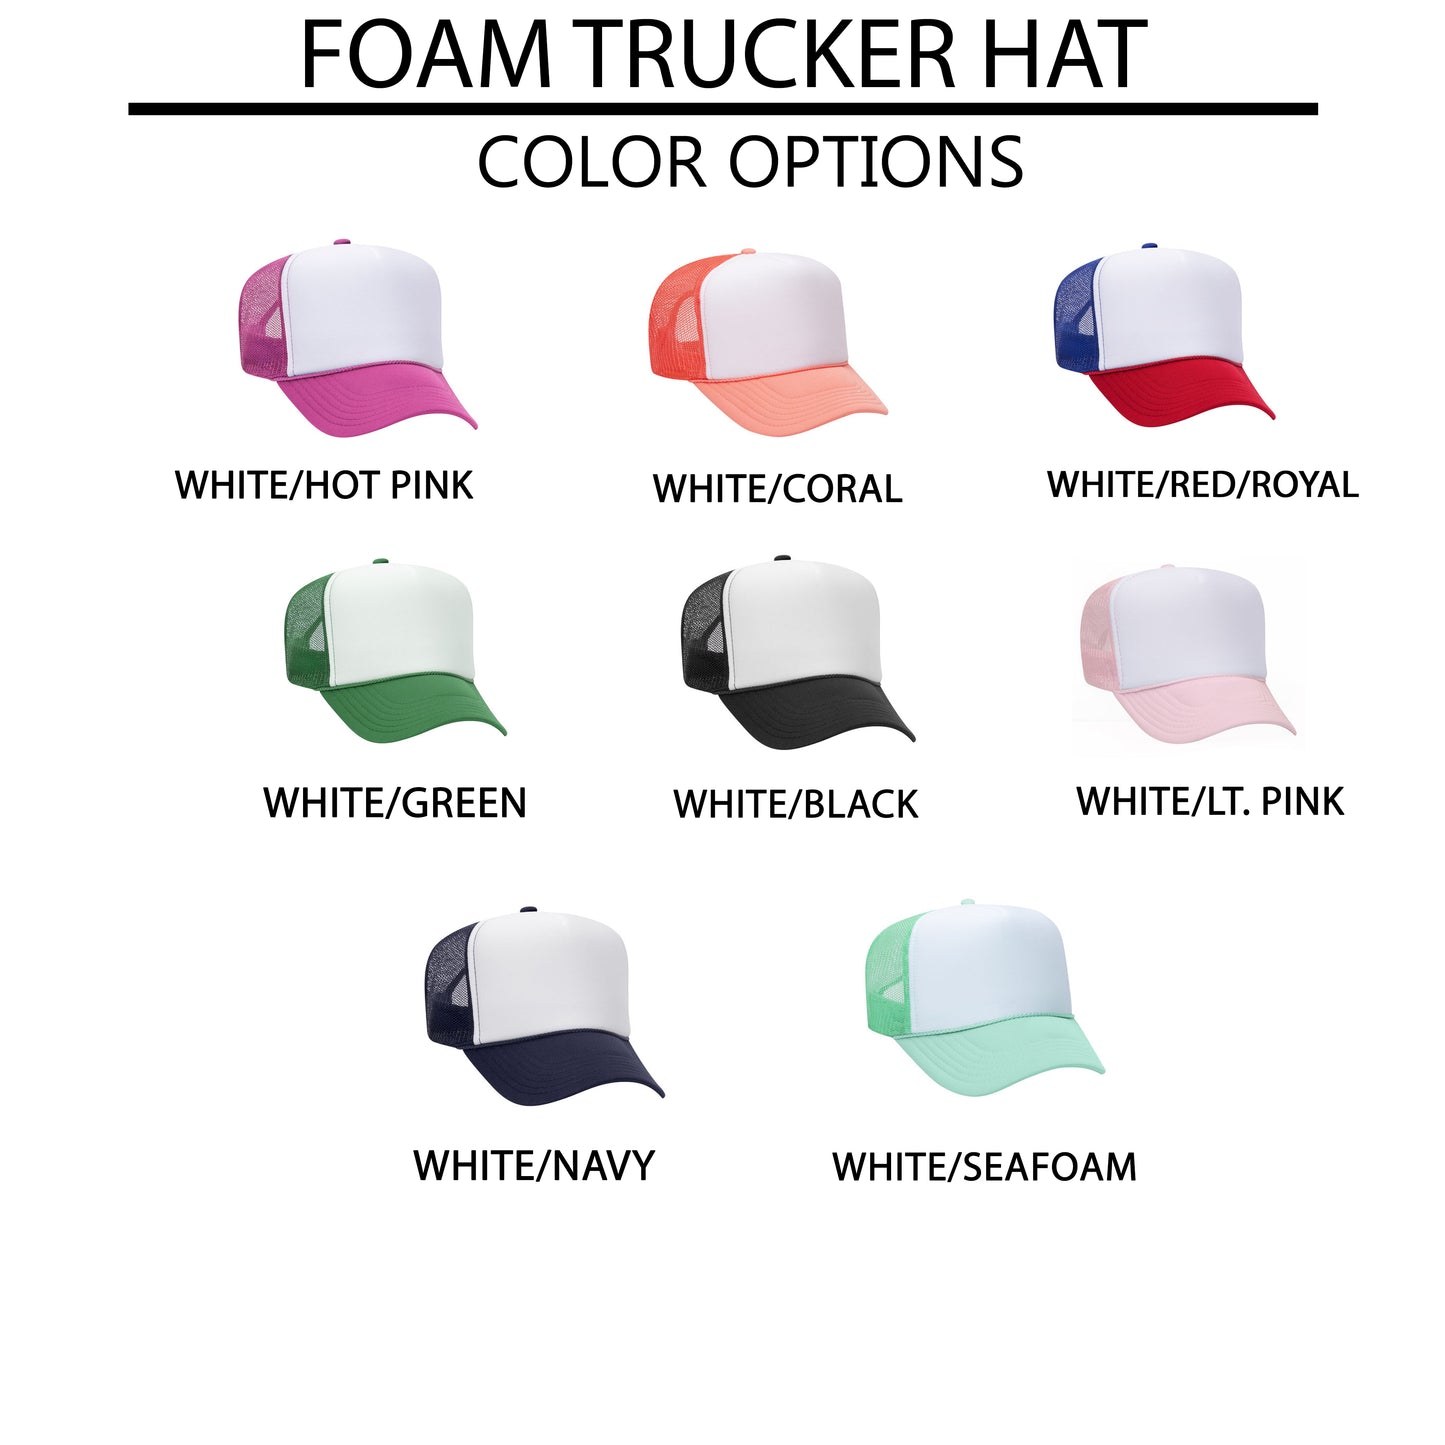 Take Me To The Mountains Landscape | Foam Trucker Hat